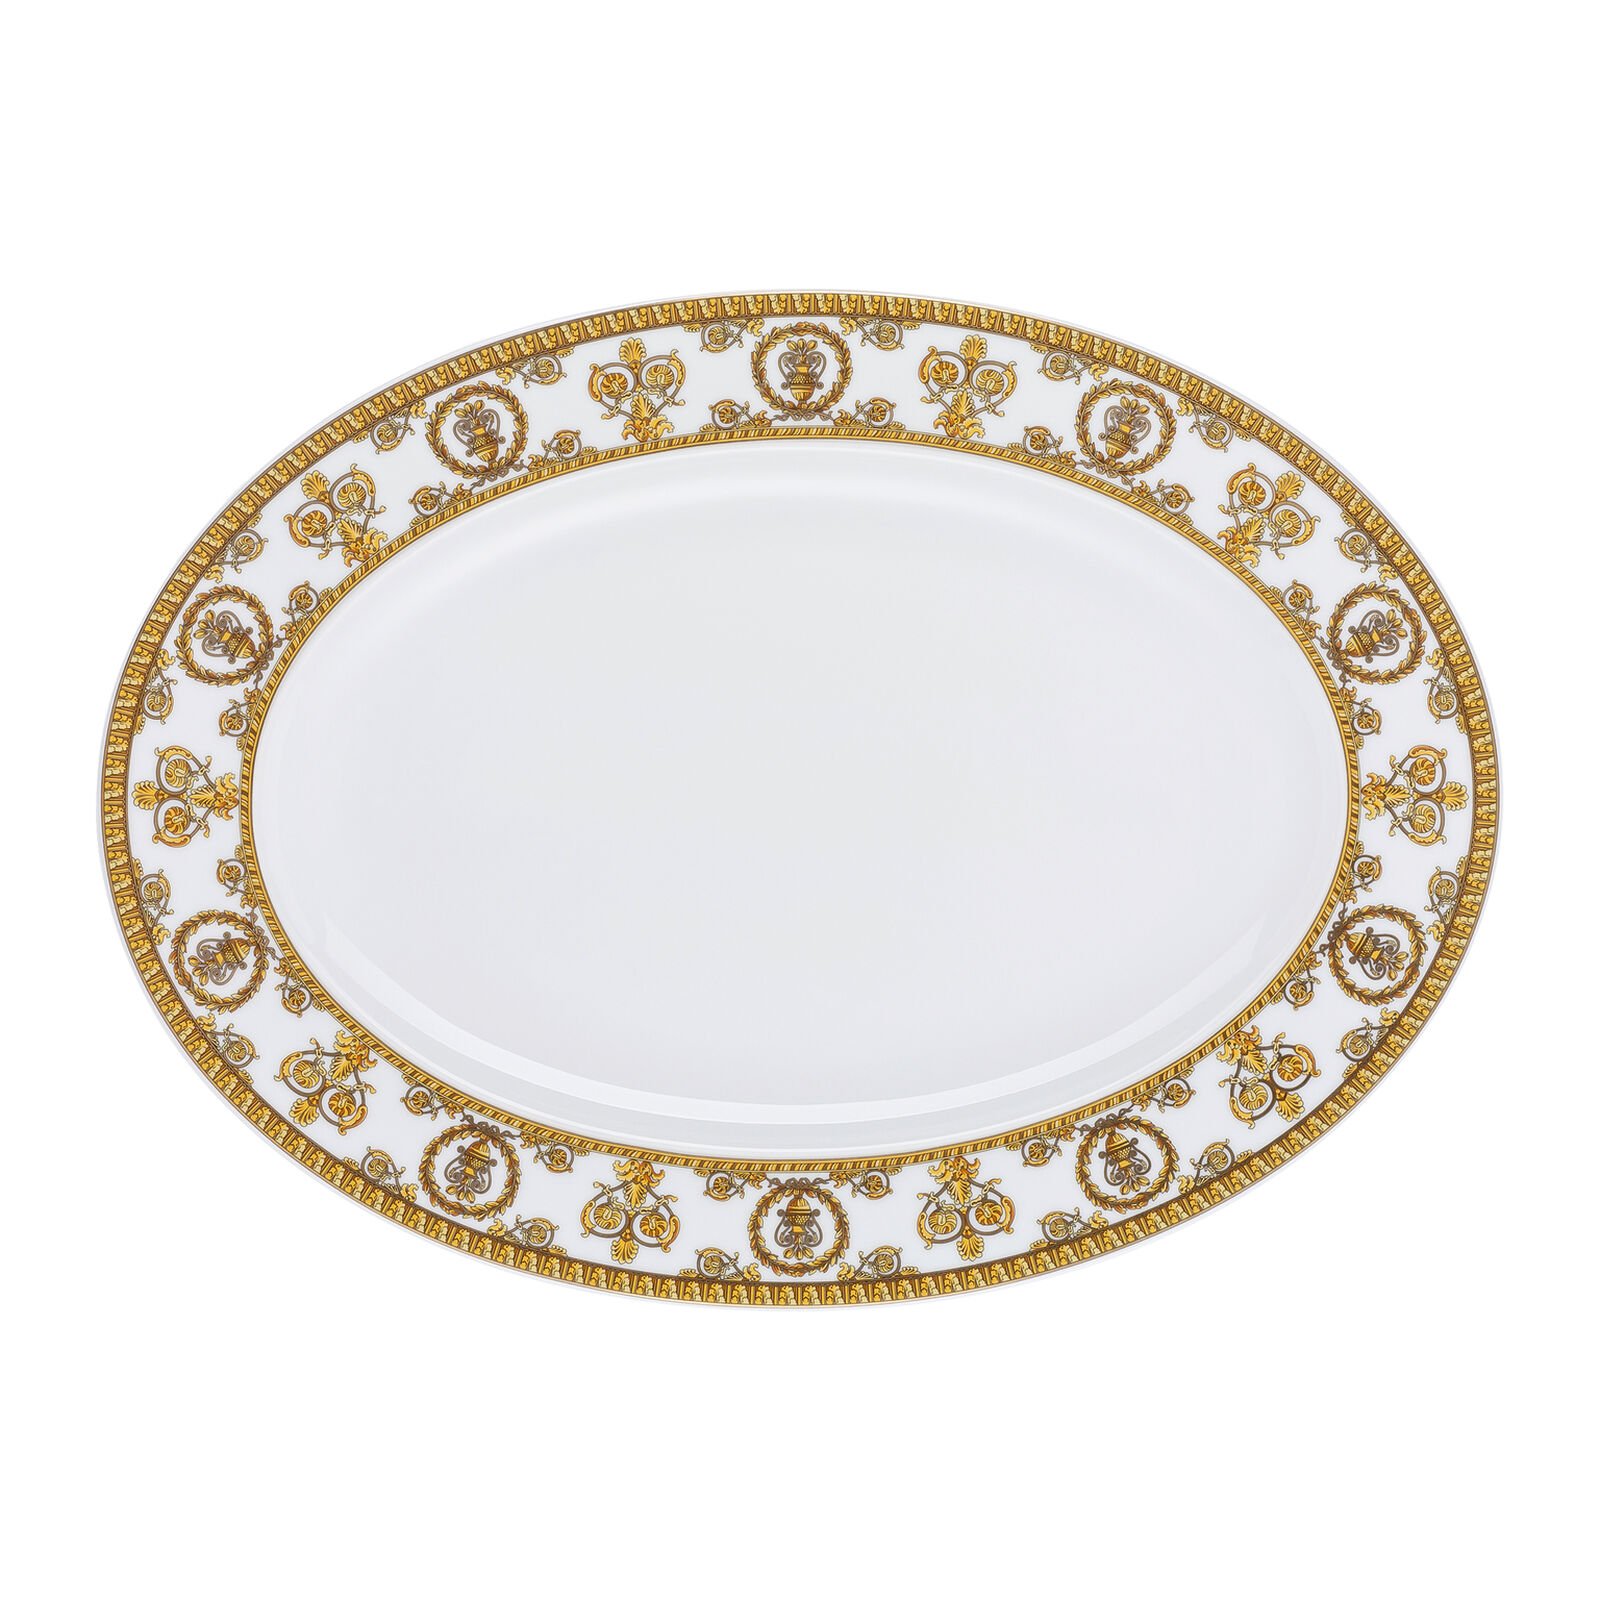 Versace Rosenthal I love Baroque Baroque Bianco platter